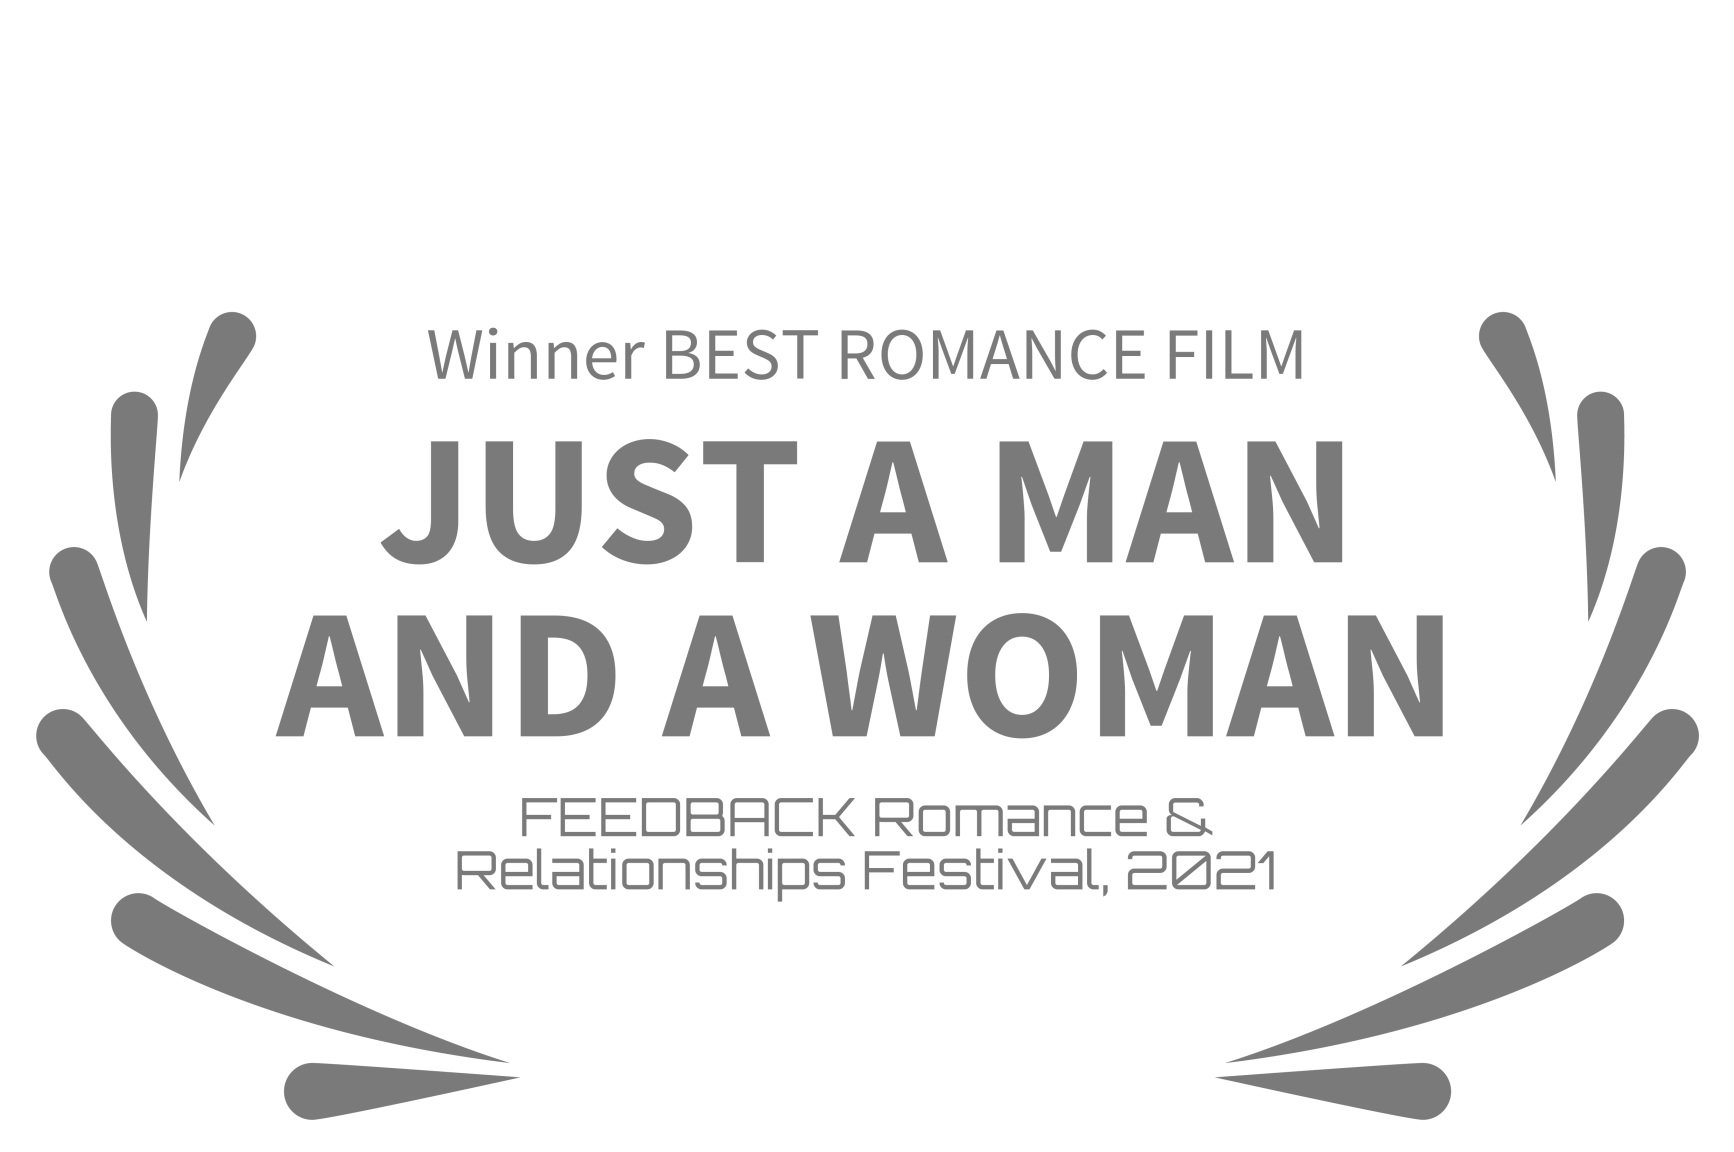 Winner+BEST+ROMANCE+FILM+-+JUST+A+MAN+AND+A+WOMAN+-+FEEDBACK+Romance++Relationships+Festival+2021.jpg